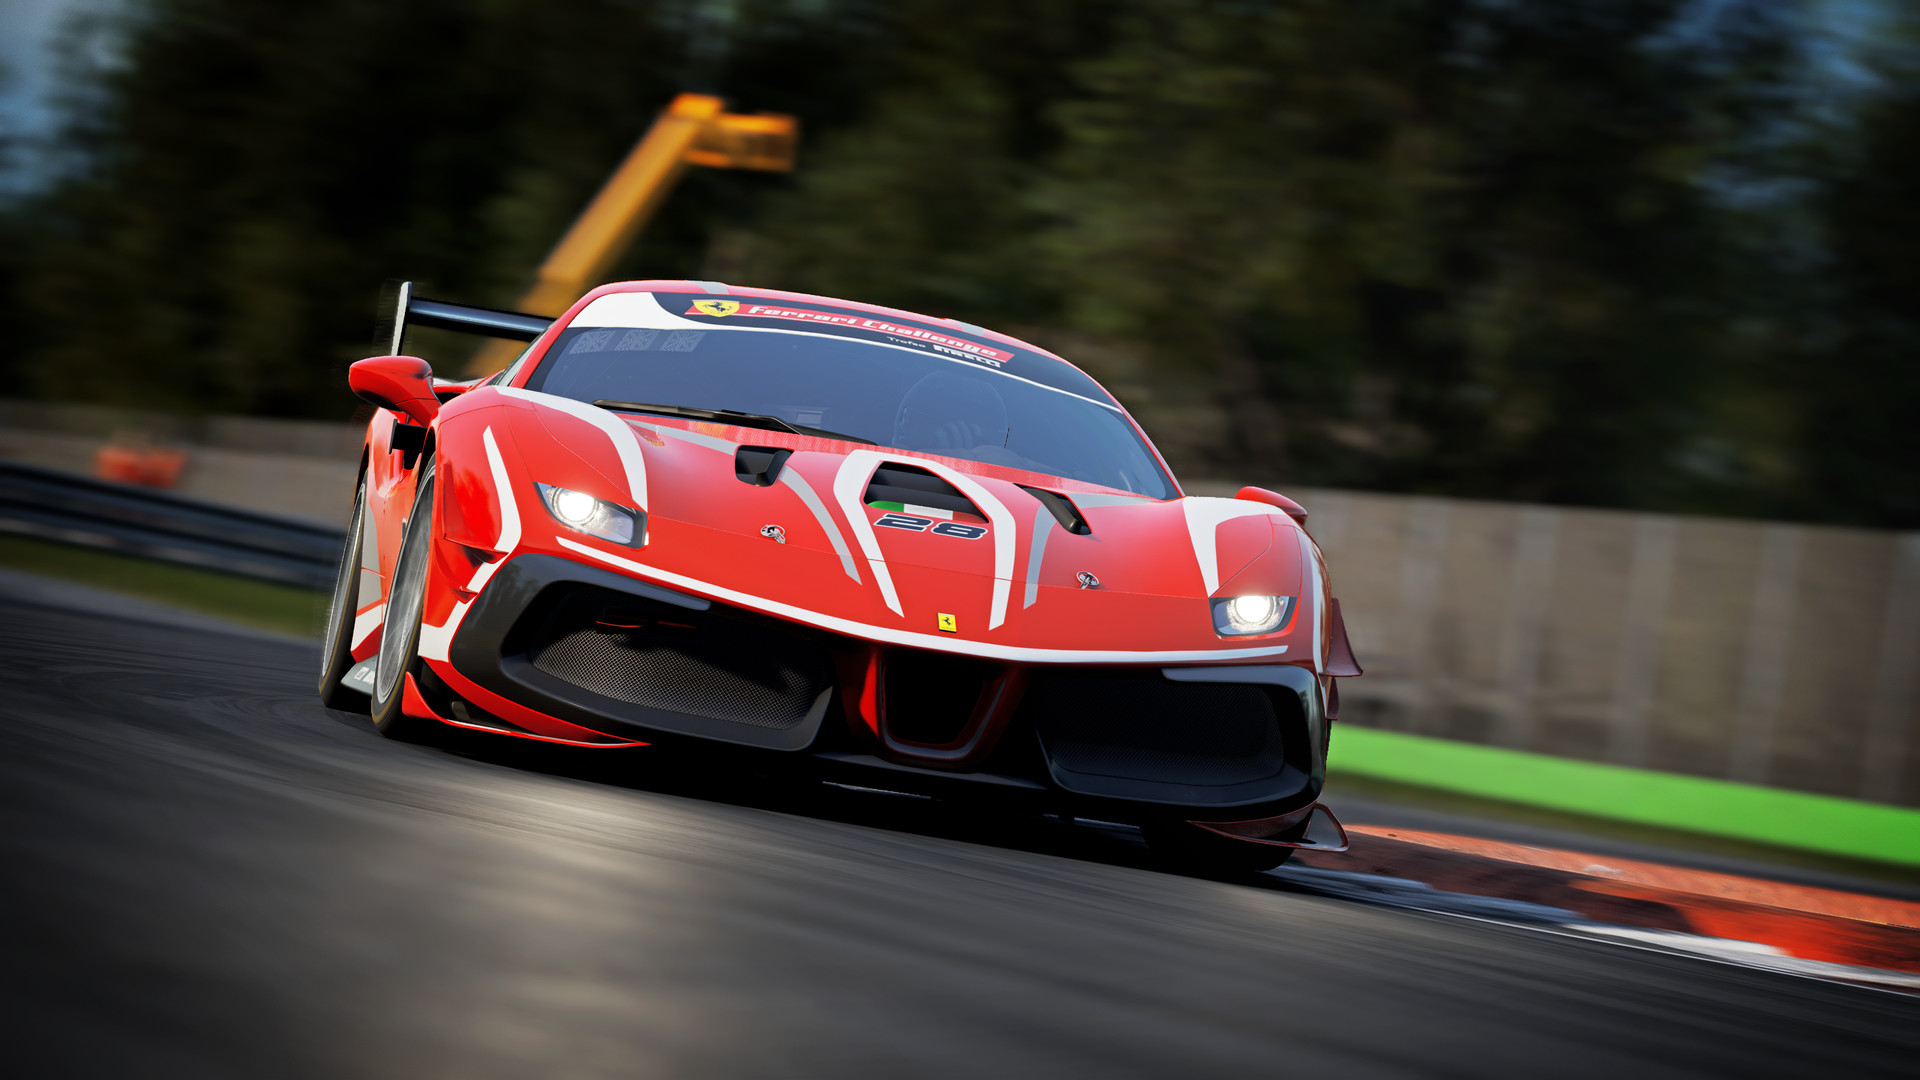 Assetto Corsa Competizione - Challengers Pack on Steam